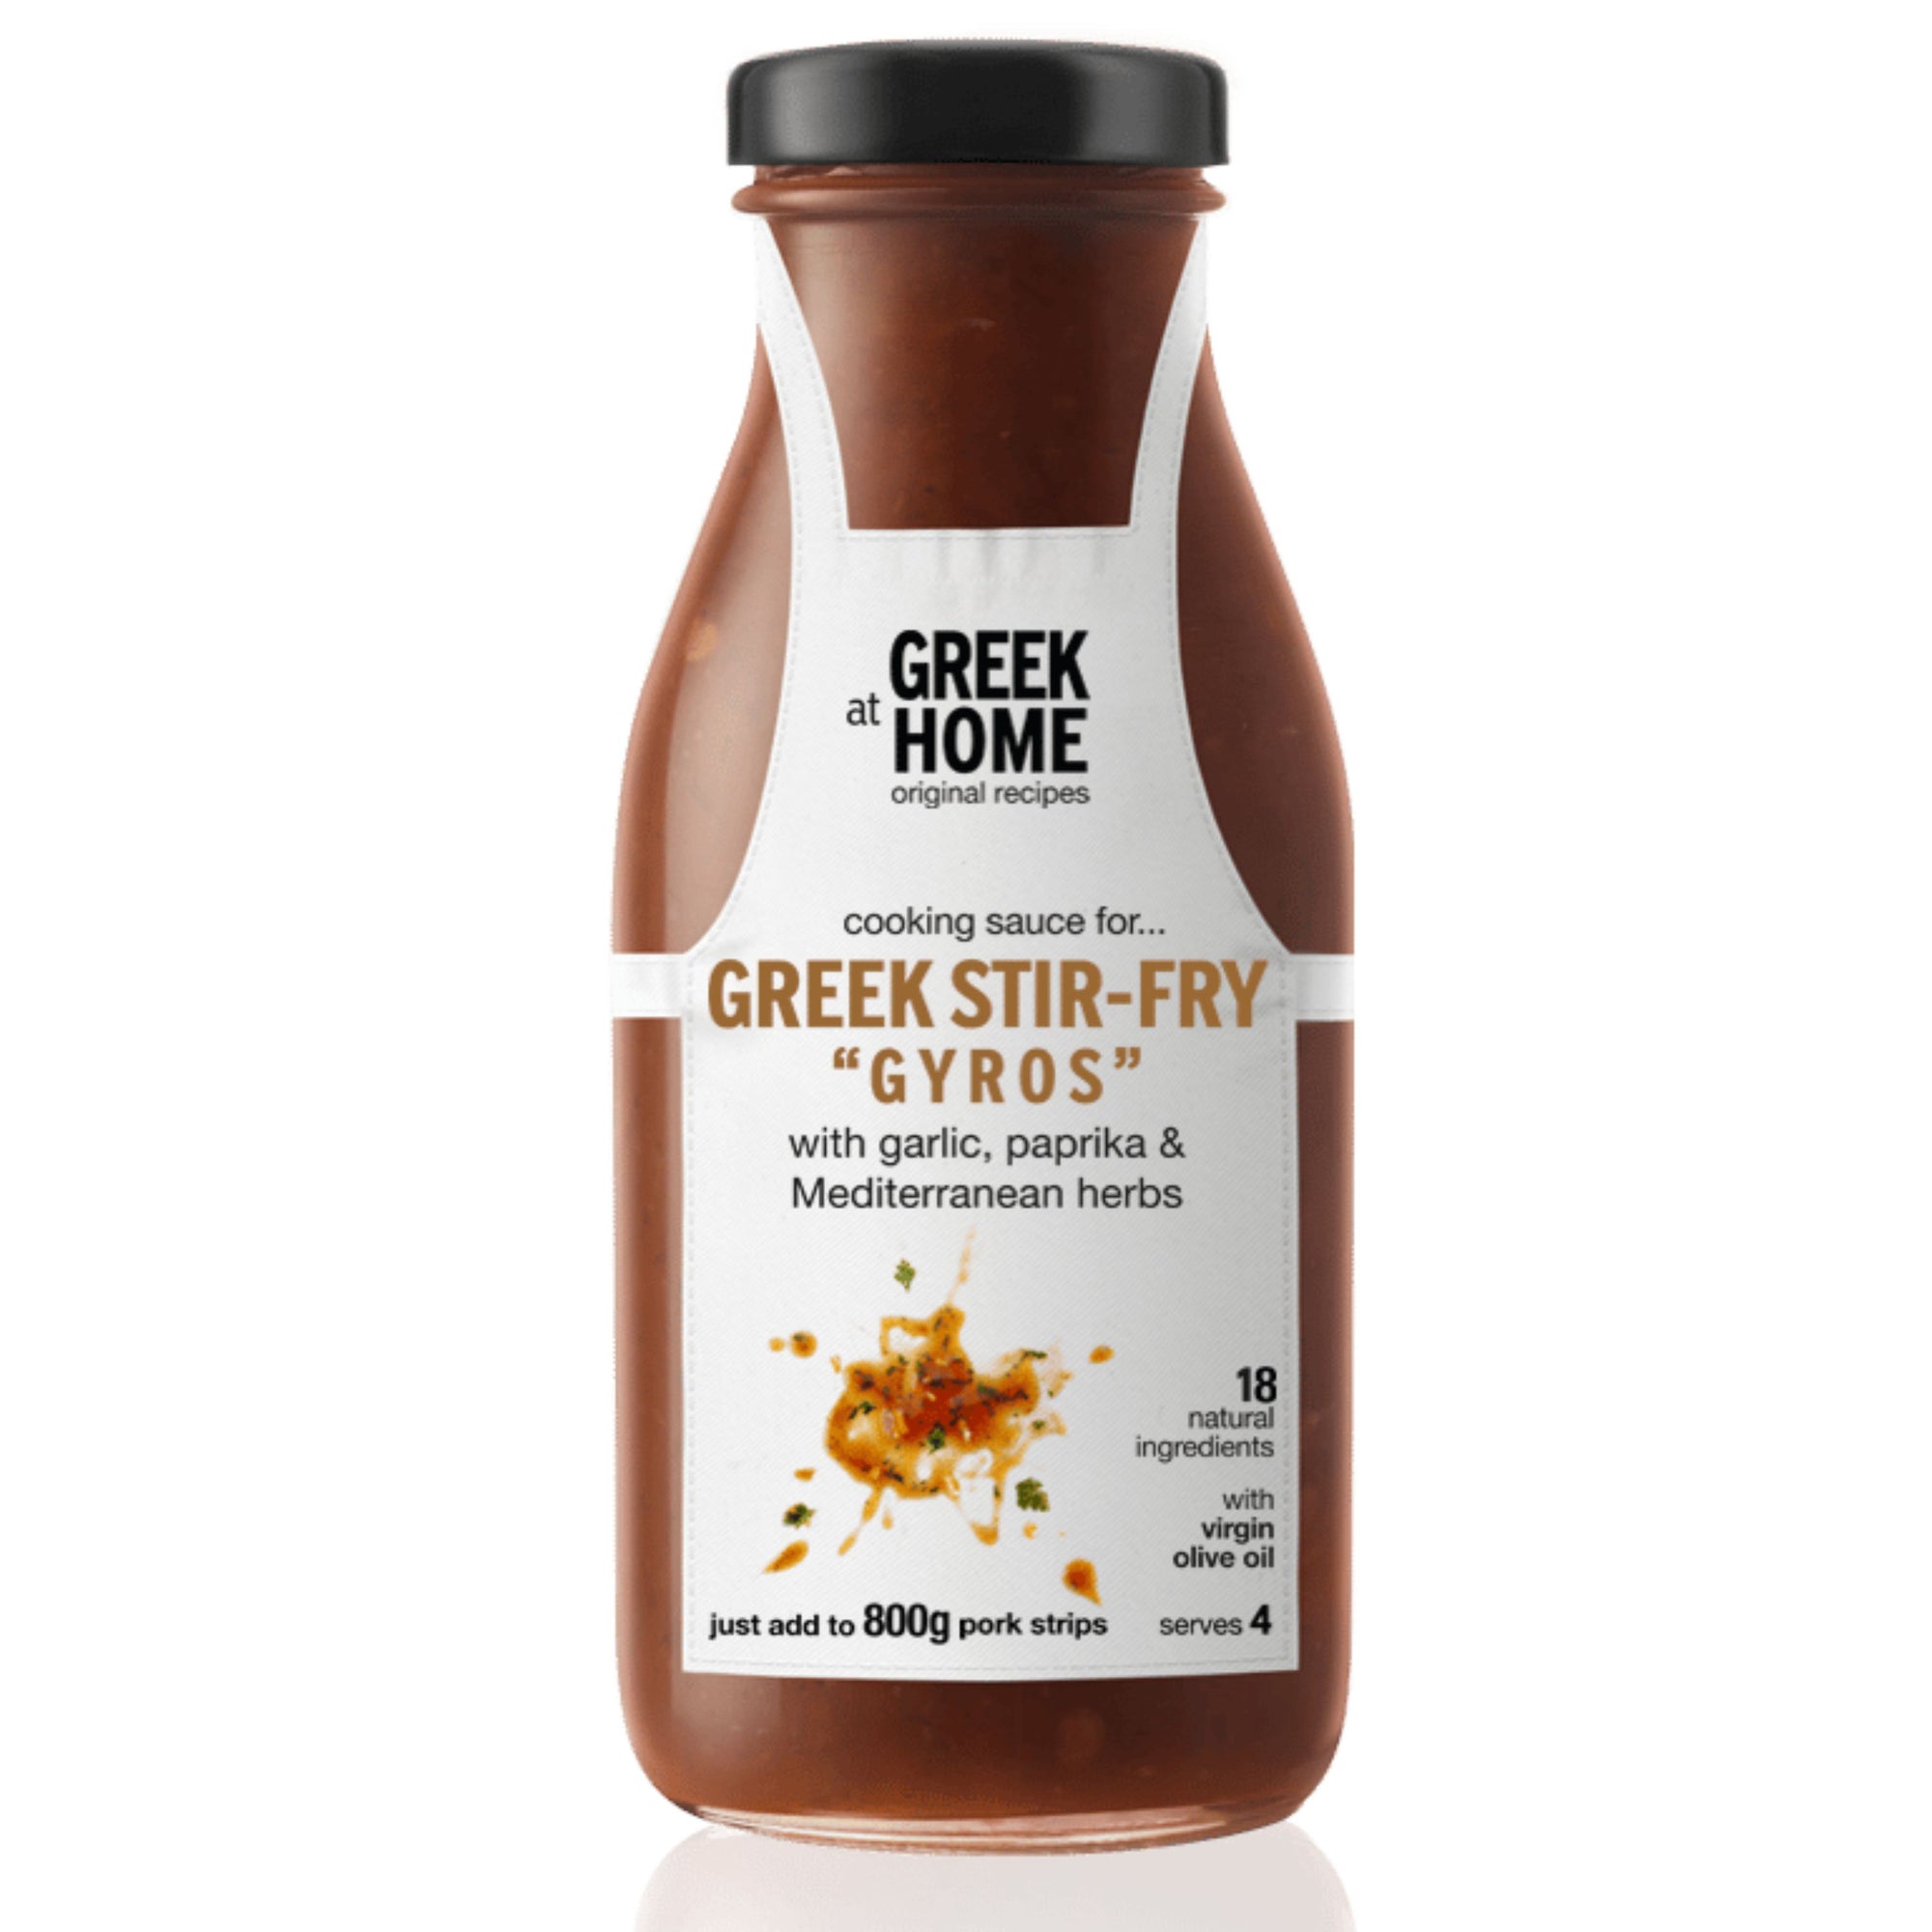 Greek Stir-Fry "Gyros" Sauce 255g